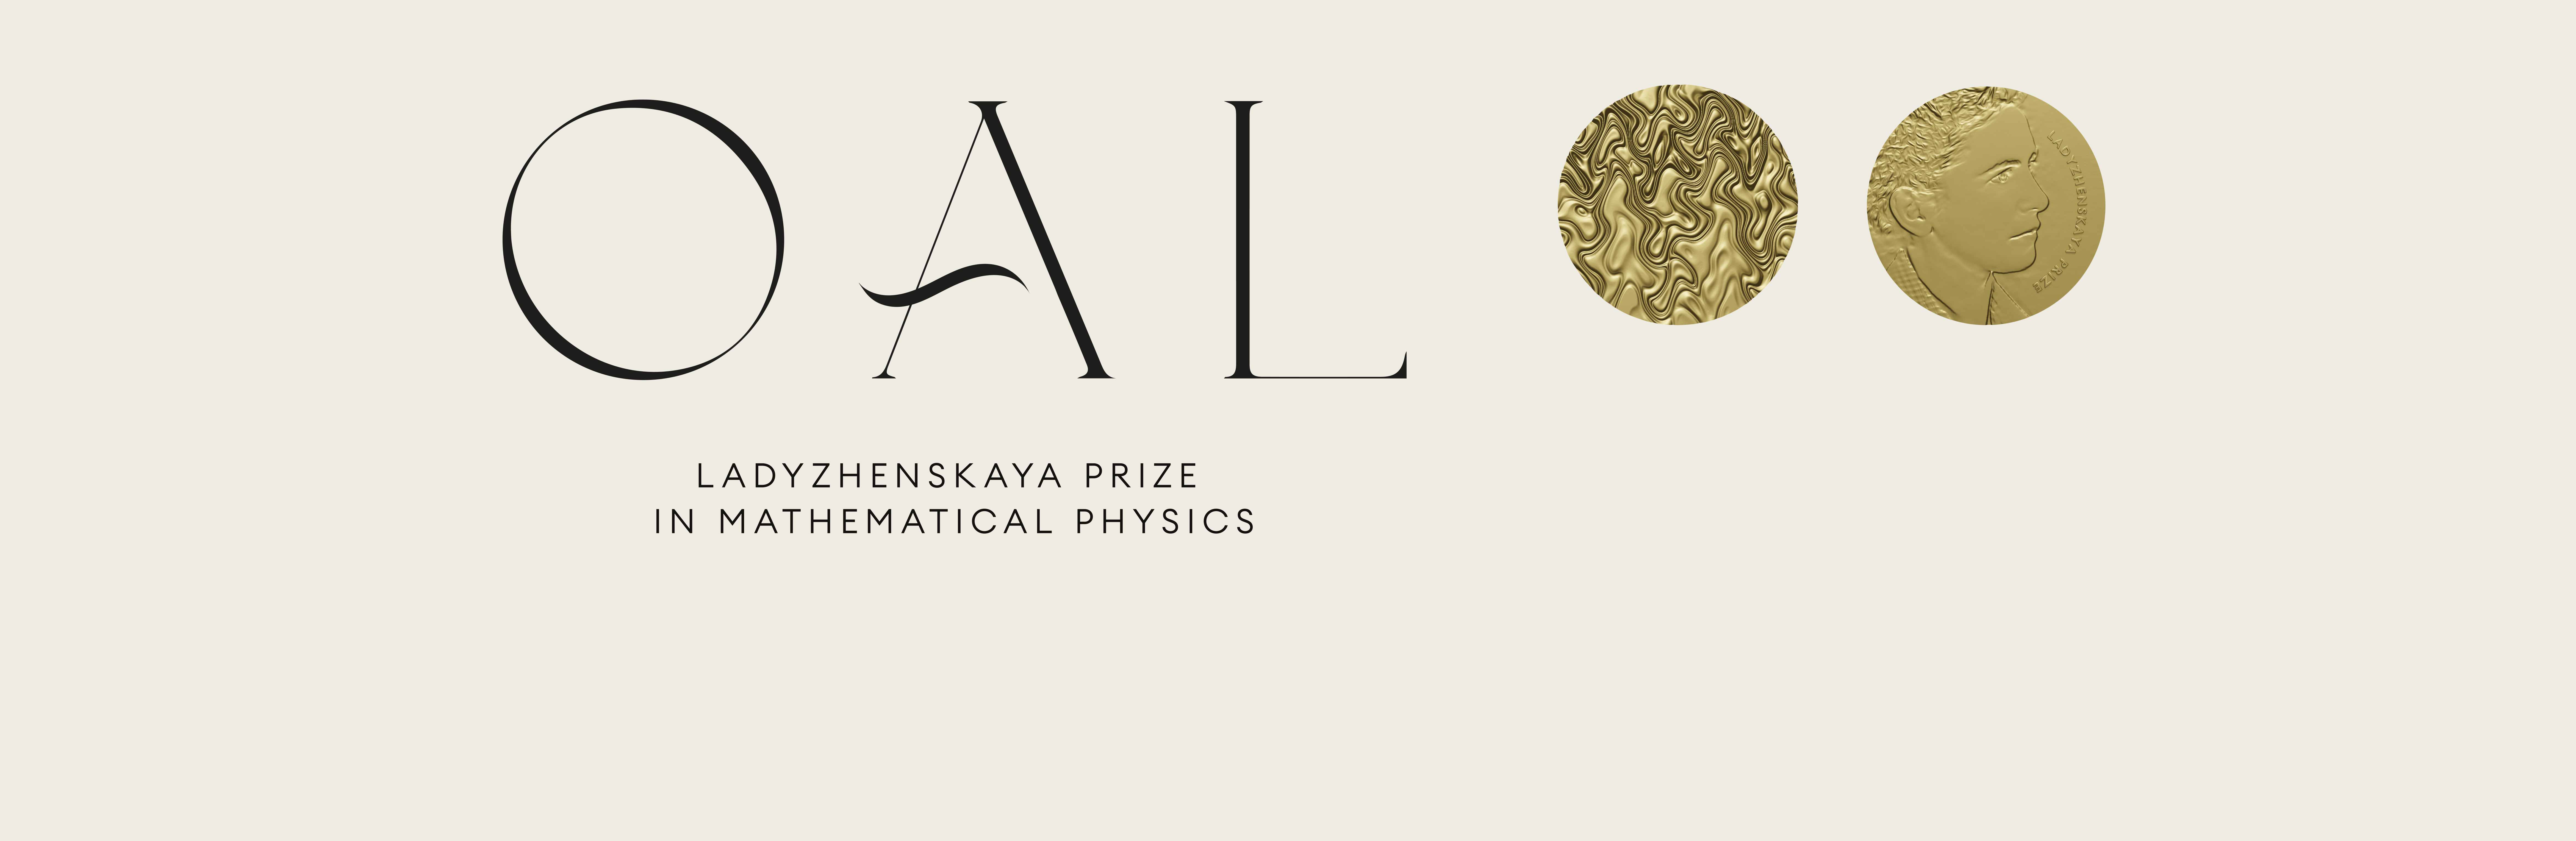 Dannie Heineman Prize for Mathematical Physics